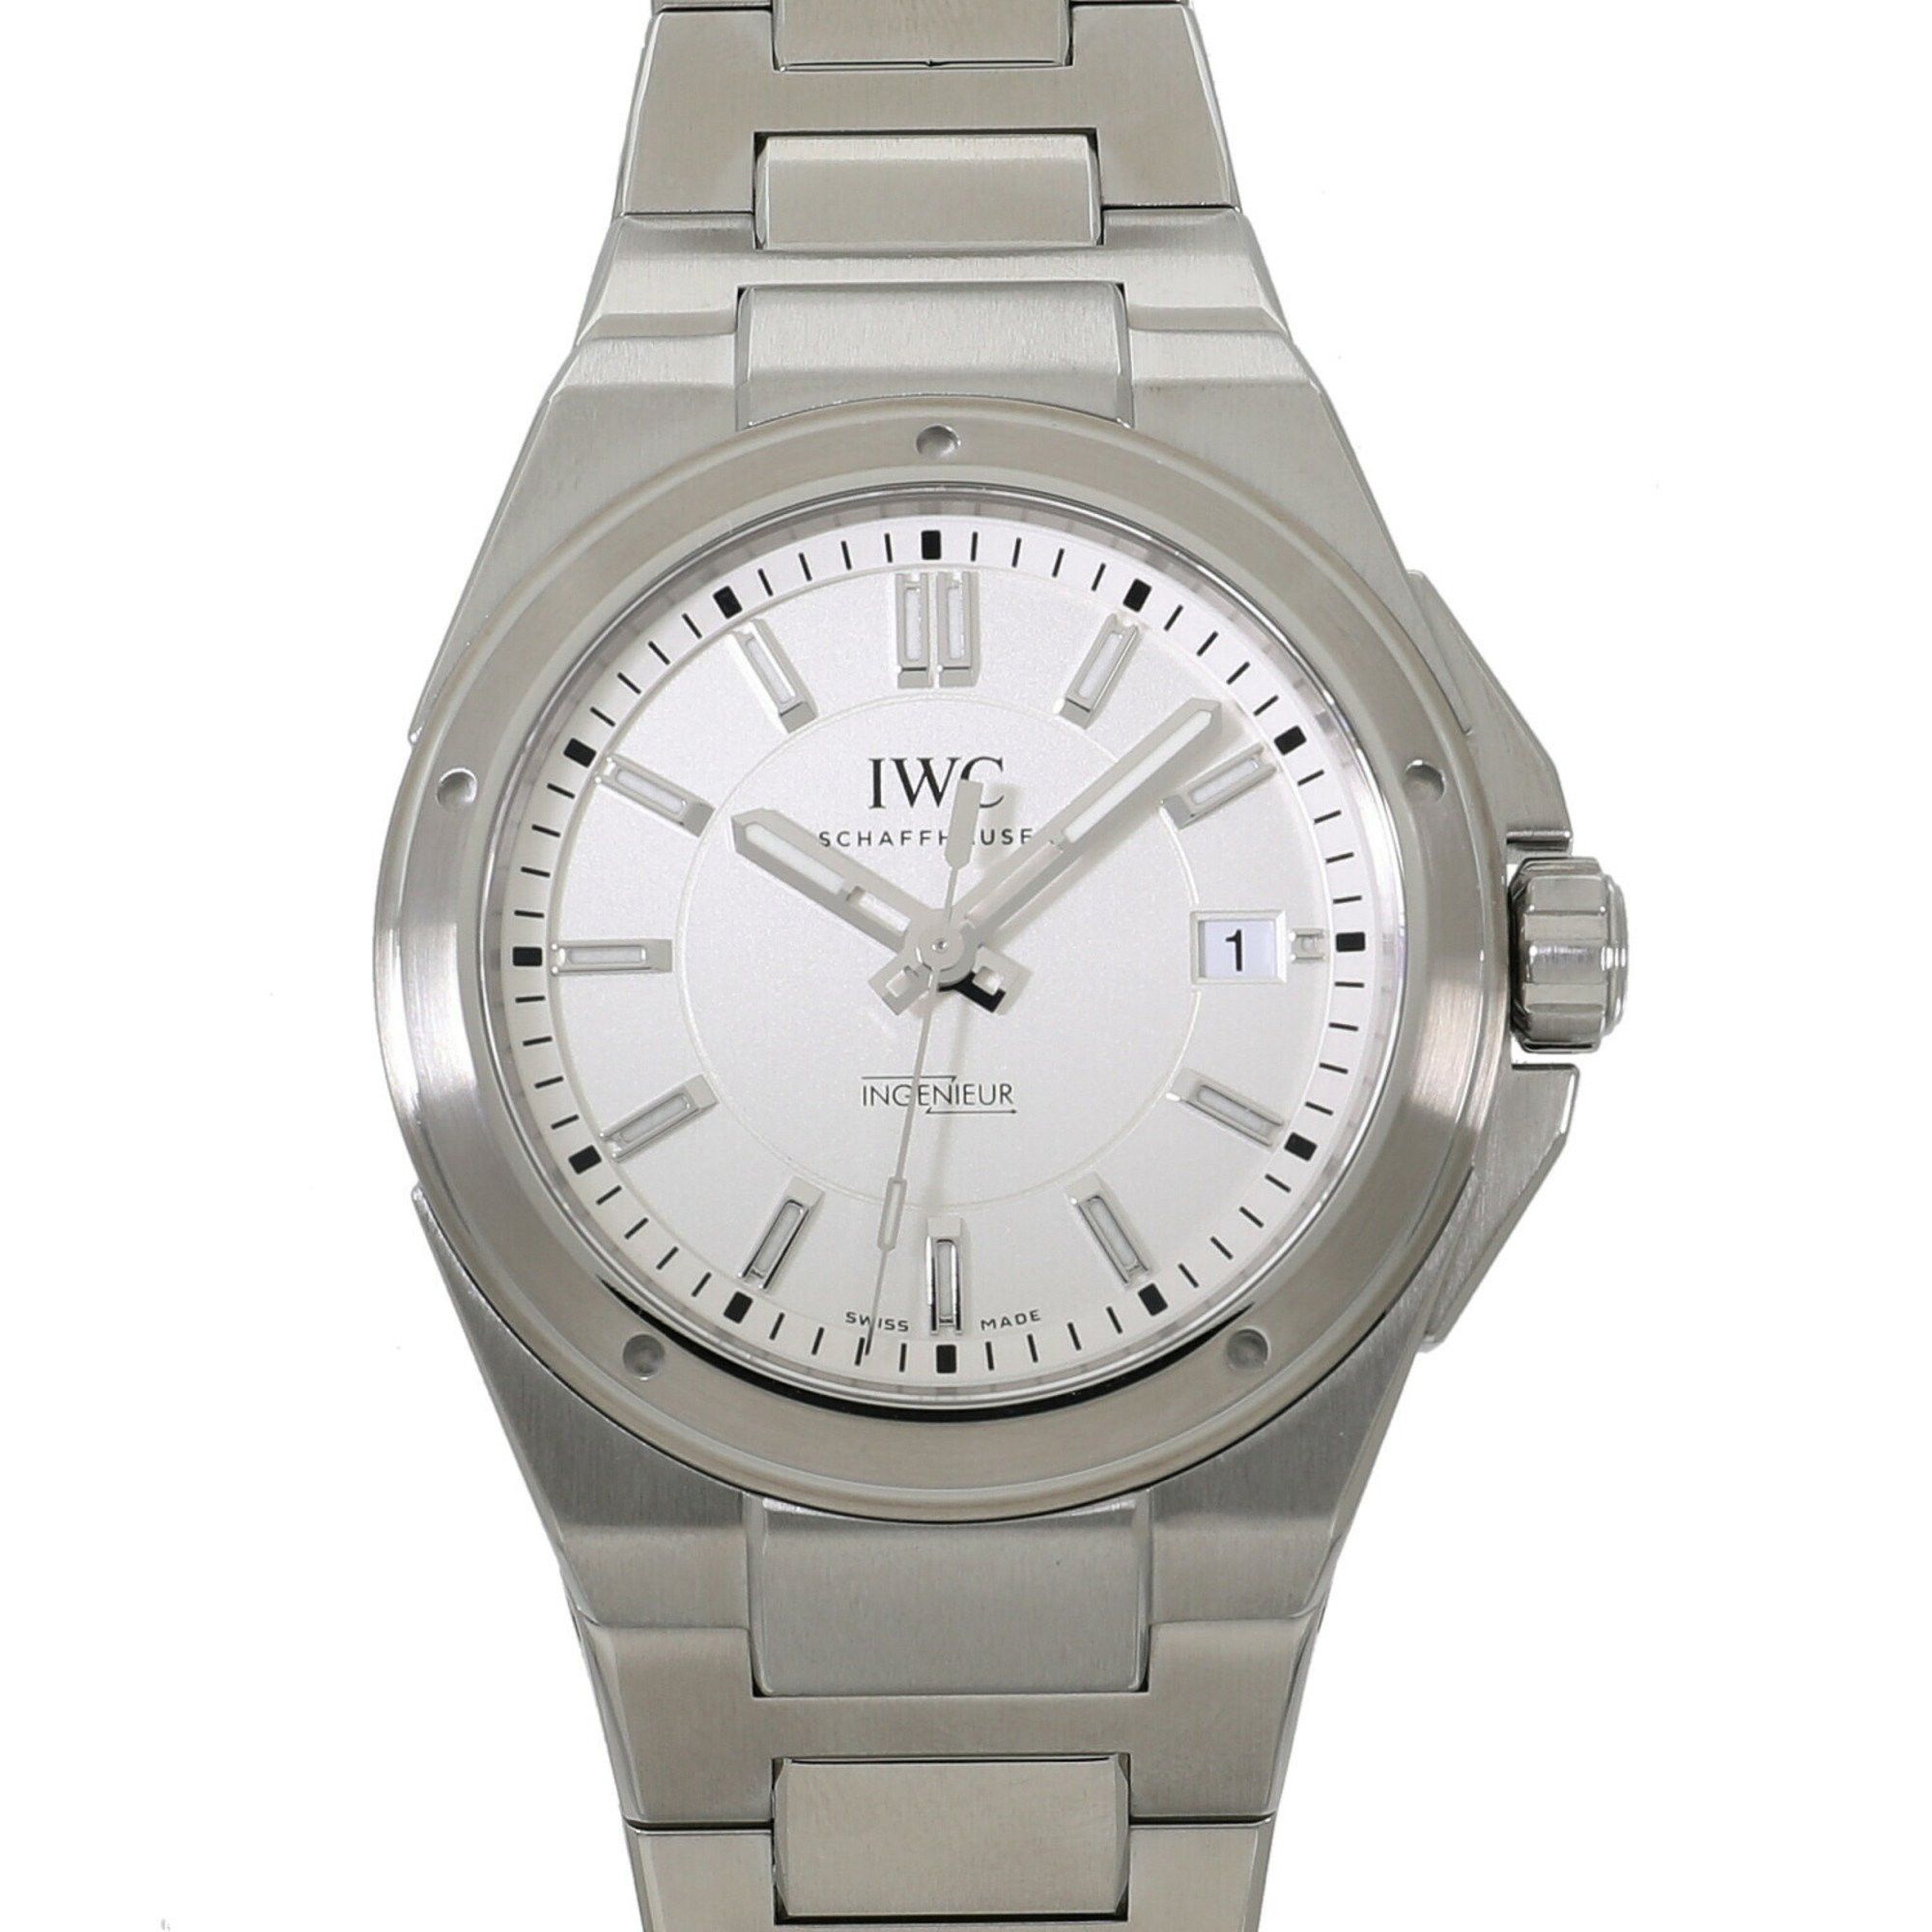 image of Iwc Schaffhausen Iwc Ingenieur Automatic Iw323904 Silver Men's Watch